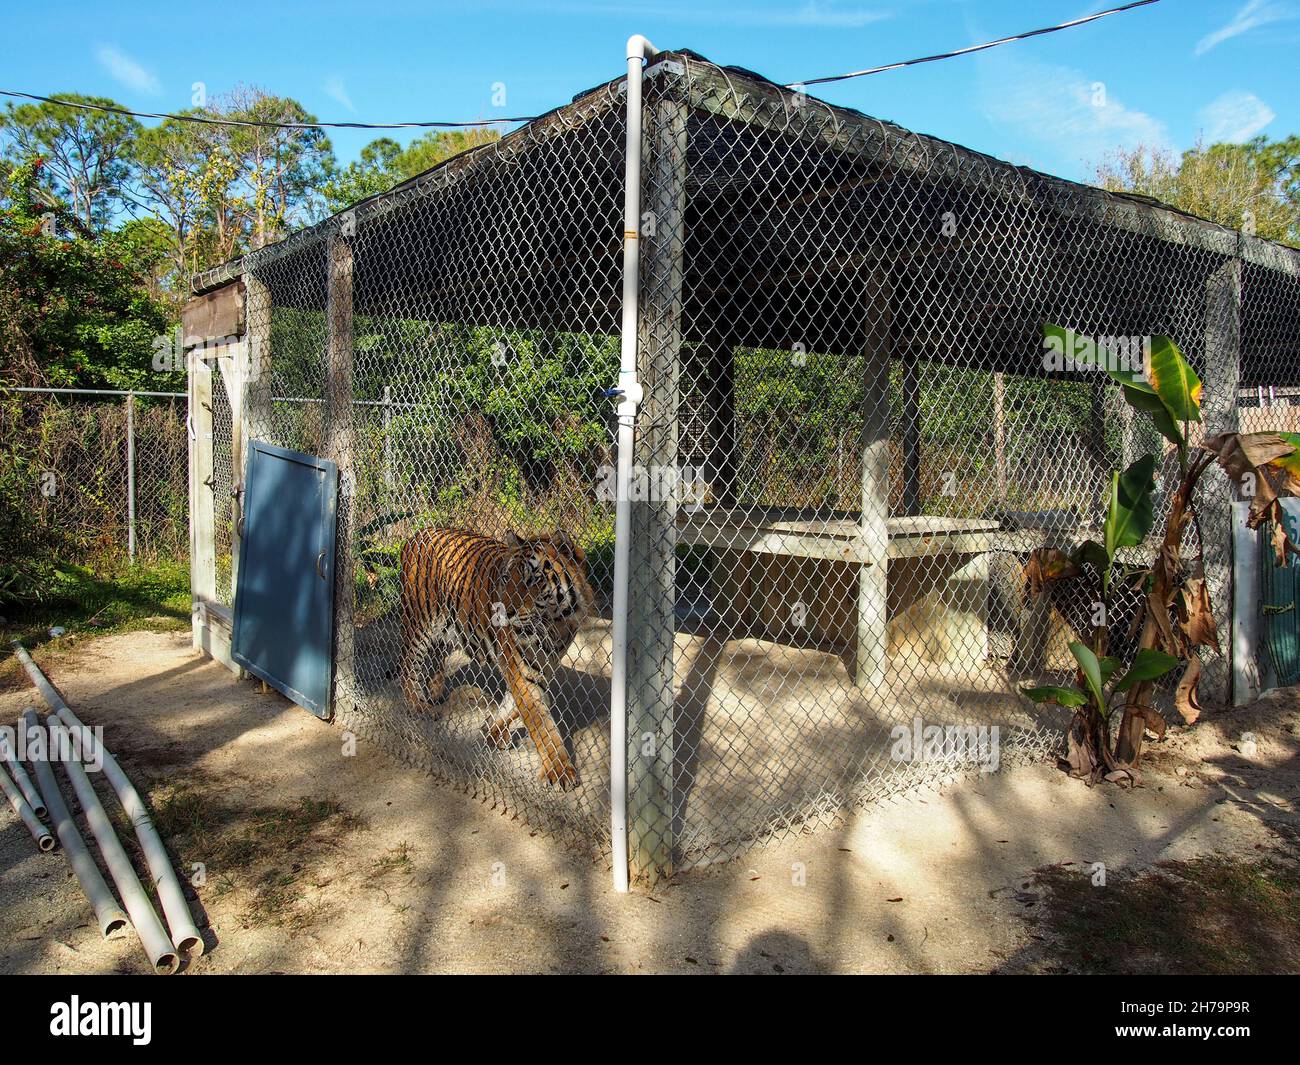 Bengalischer Tiger in seinem Gehege im Octagon Wildlife Sanctuary in Punta Gorda, Florida, USA, 2020 © Katharine Andriotis Stockfoto